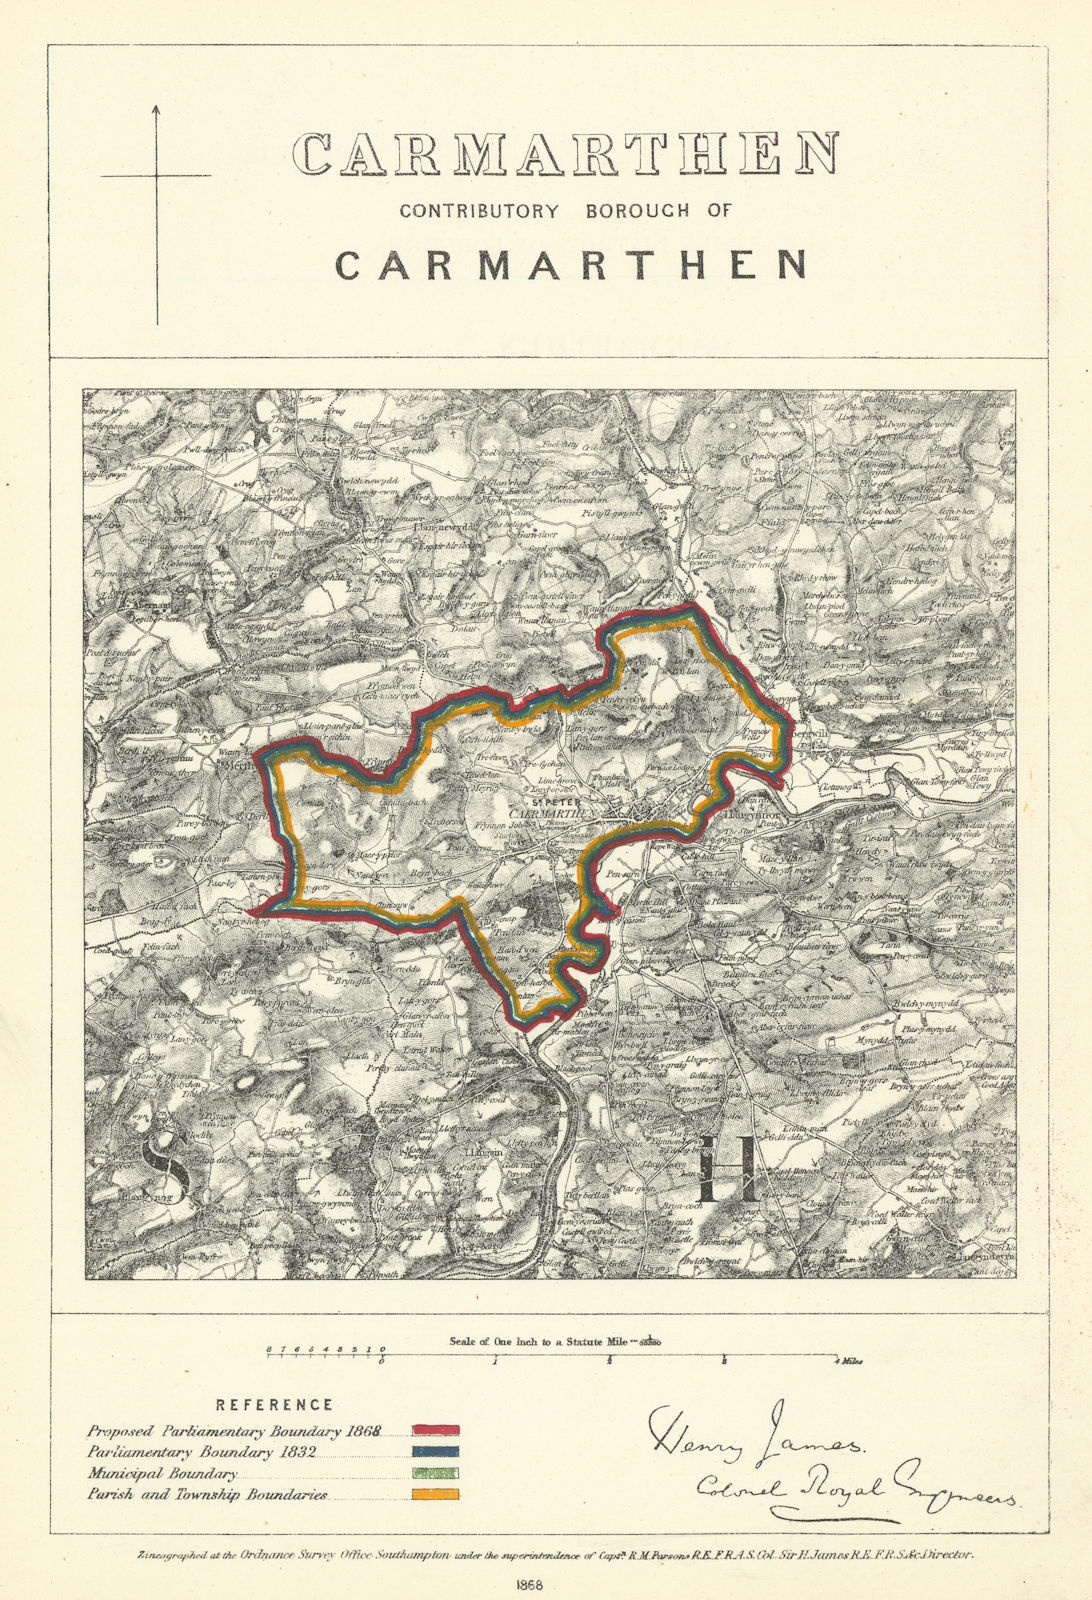 Carmarthen Contrib'y Borough of Carmarthen. JAMES. Boundary Commission 1868 map